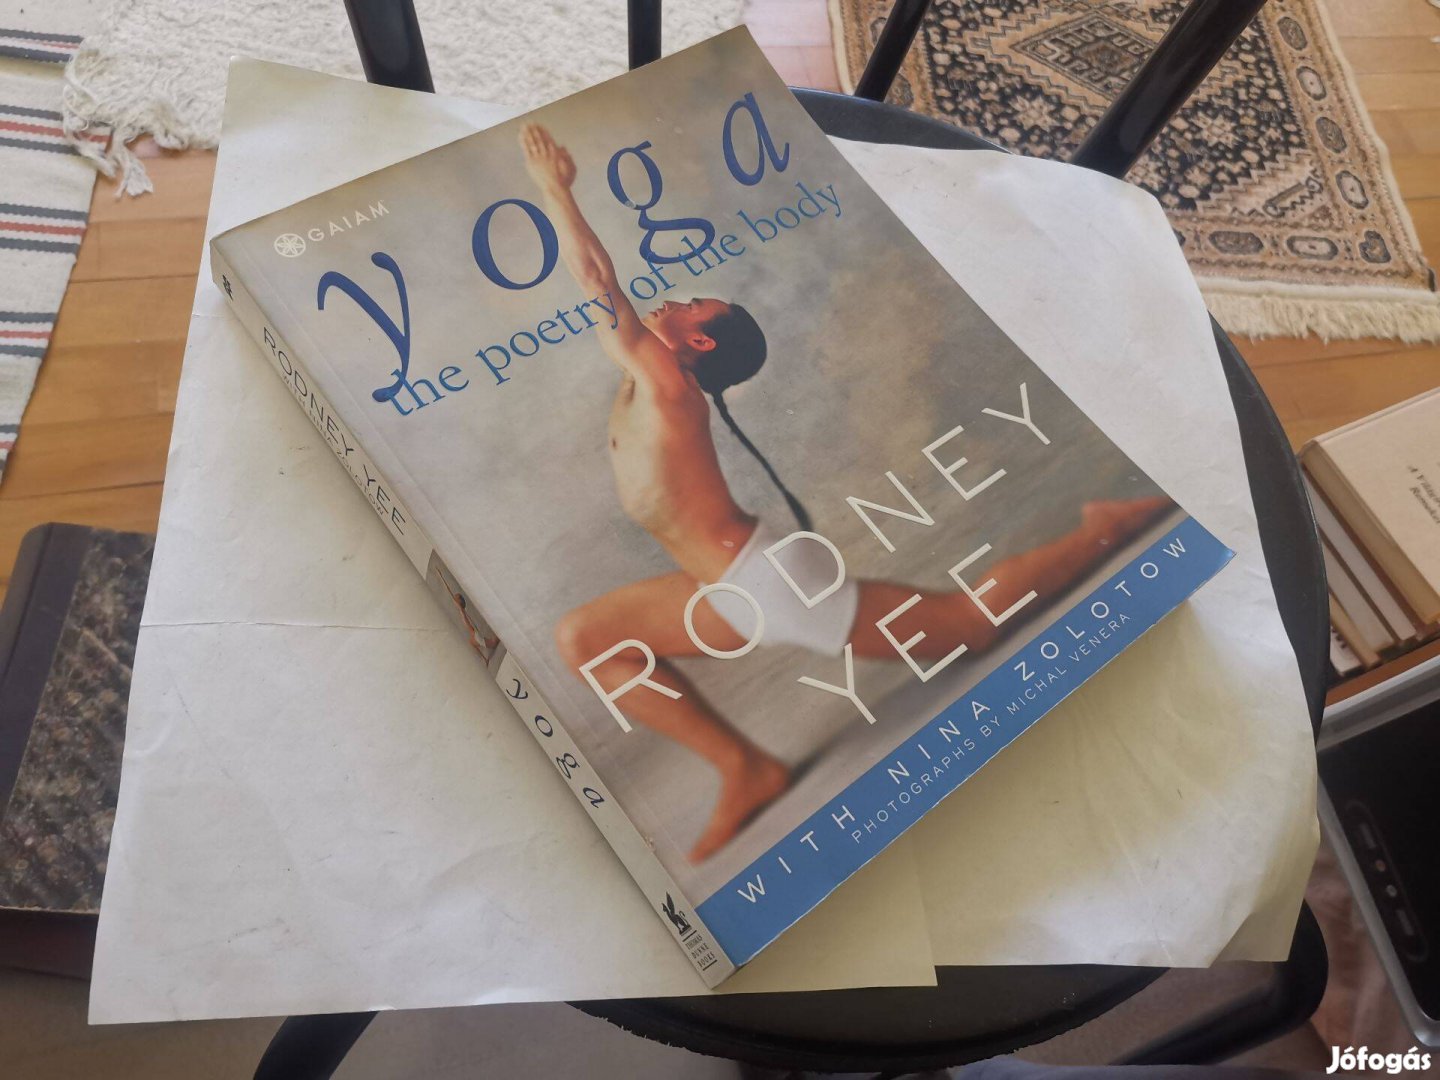 Rodney Yee - Yoga the poetry of the body - nagy jóga könyv